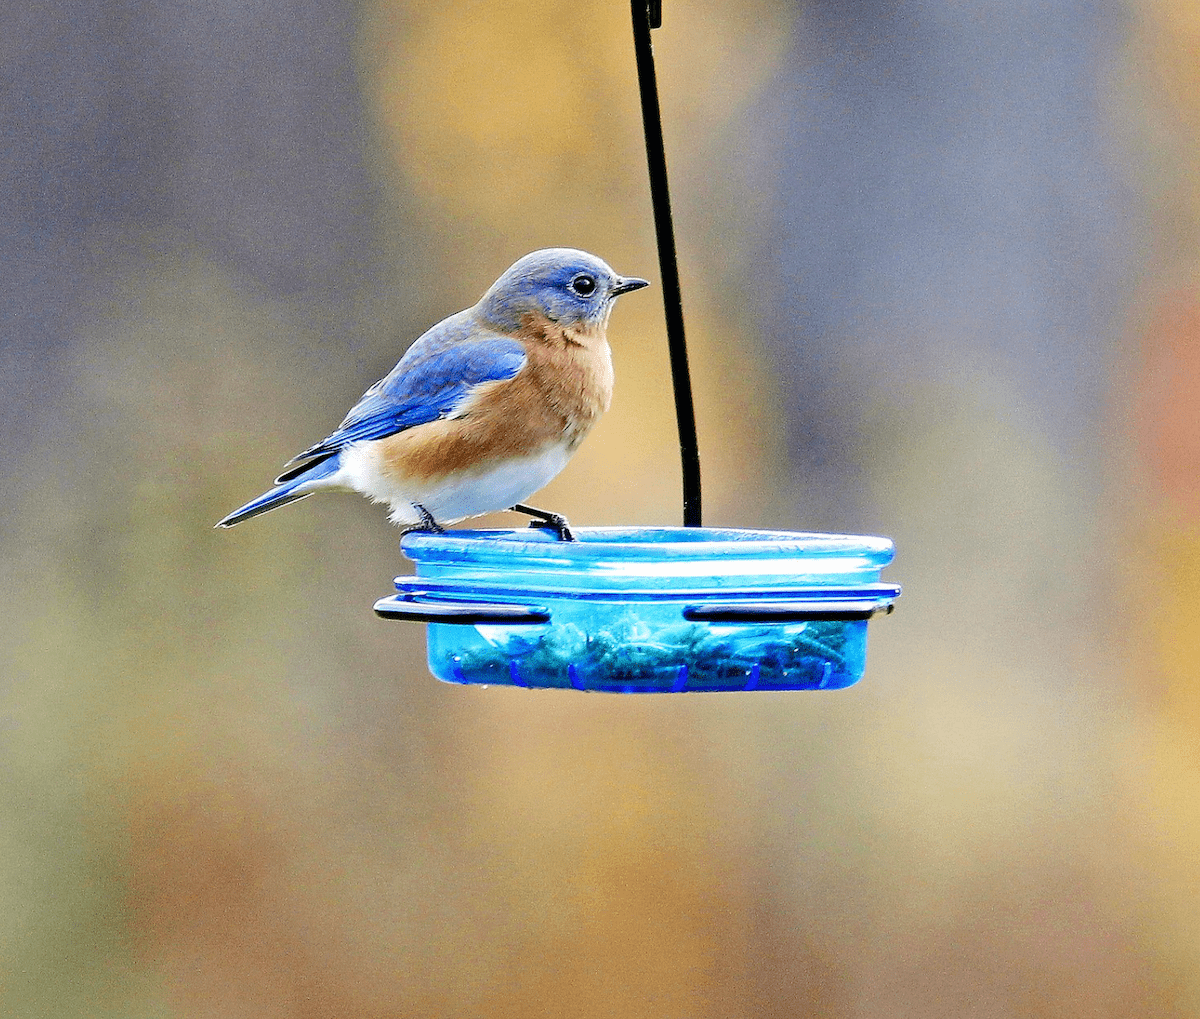 The Best Bluebird Feeders and Feeding Tips